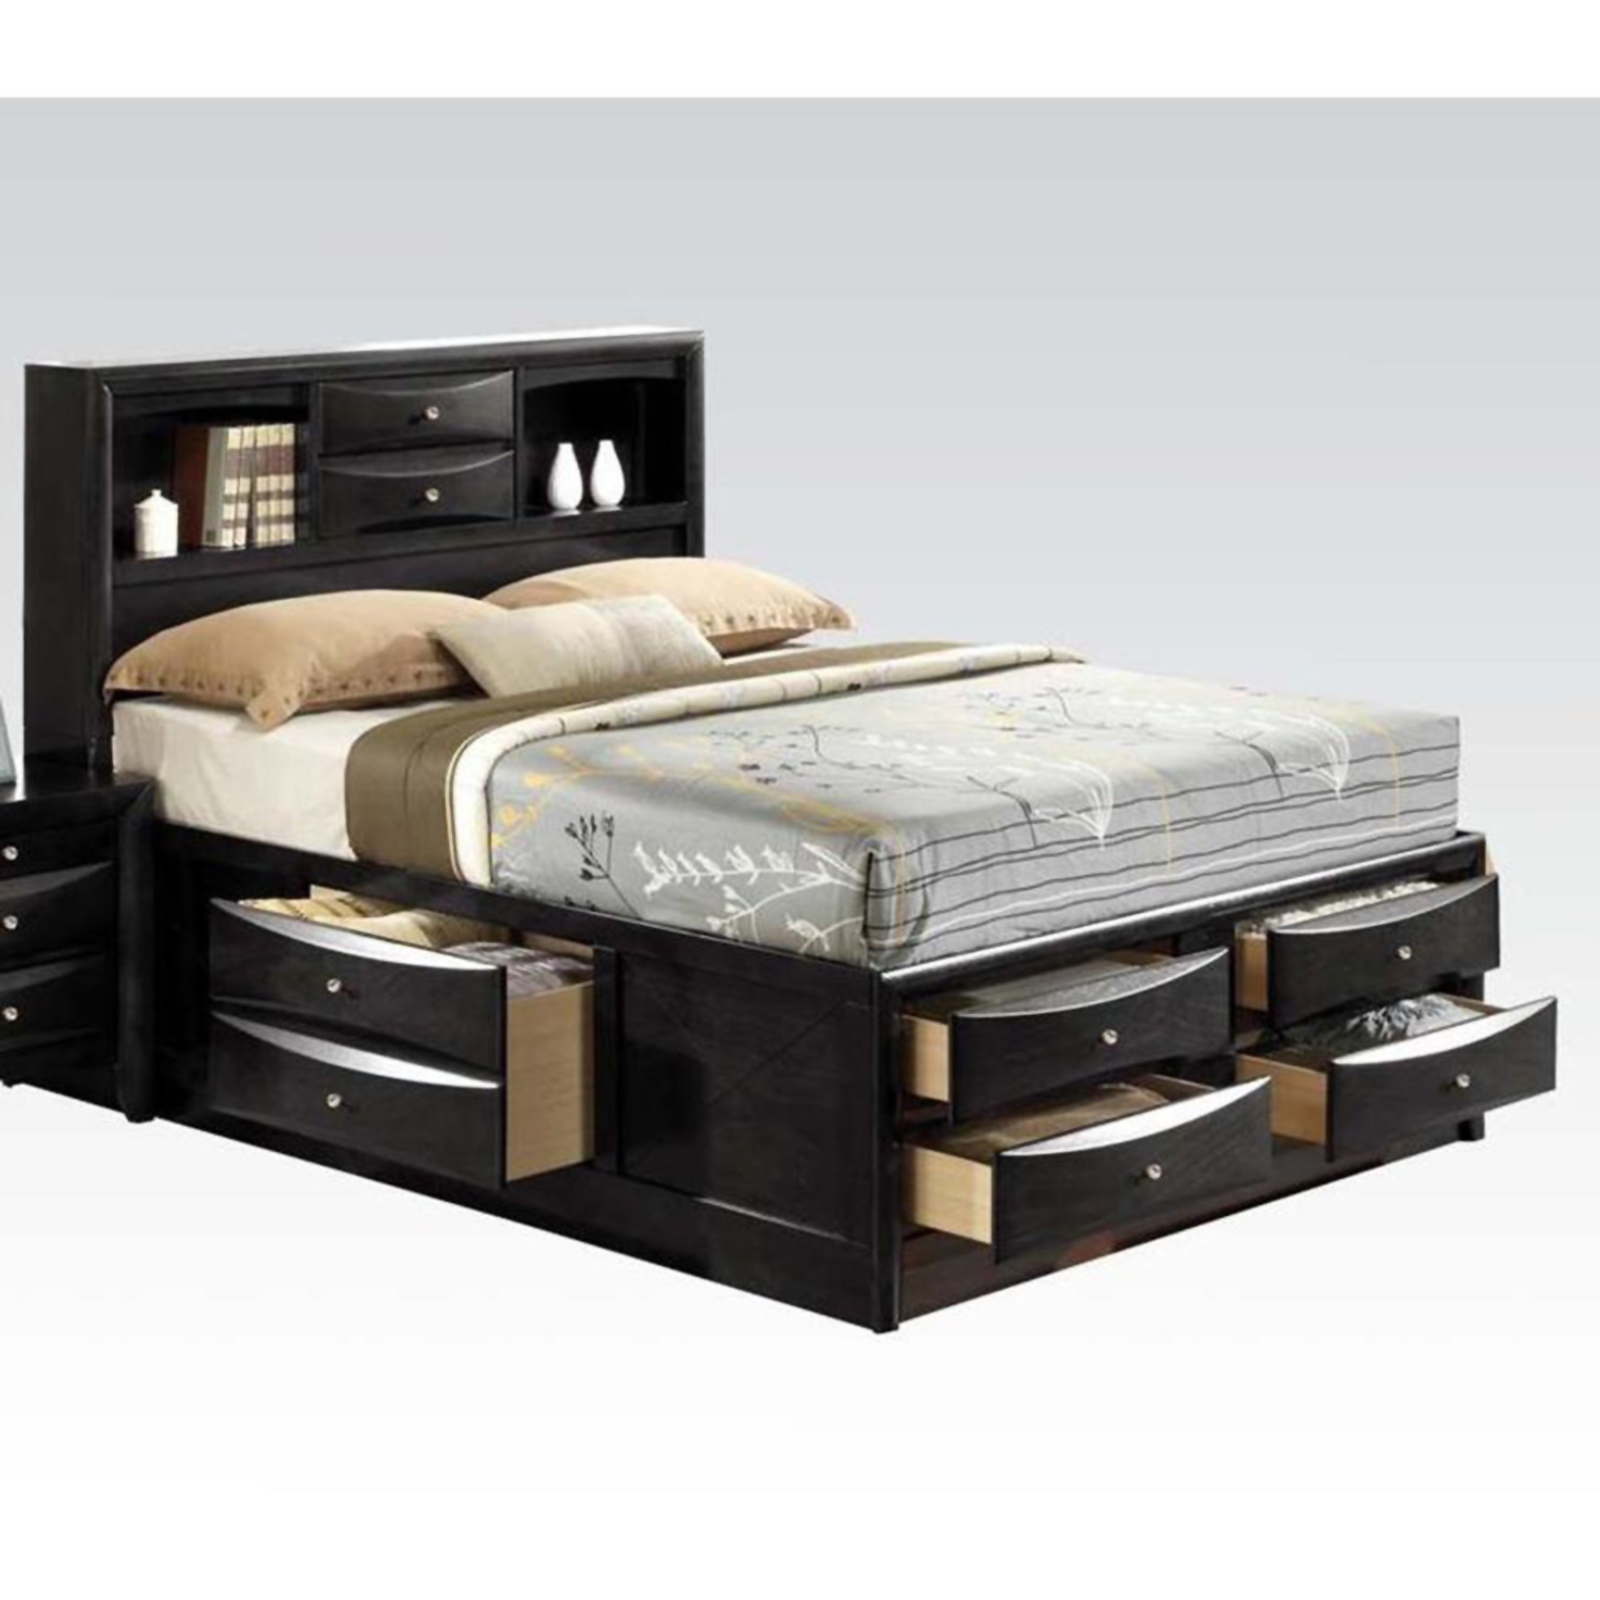 Acme United Ireland King Storage Bed with Bookcase Drawers - Black